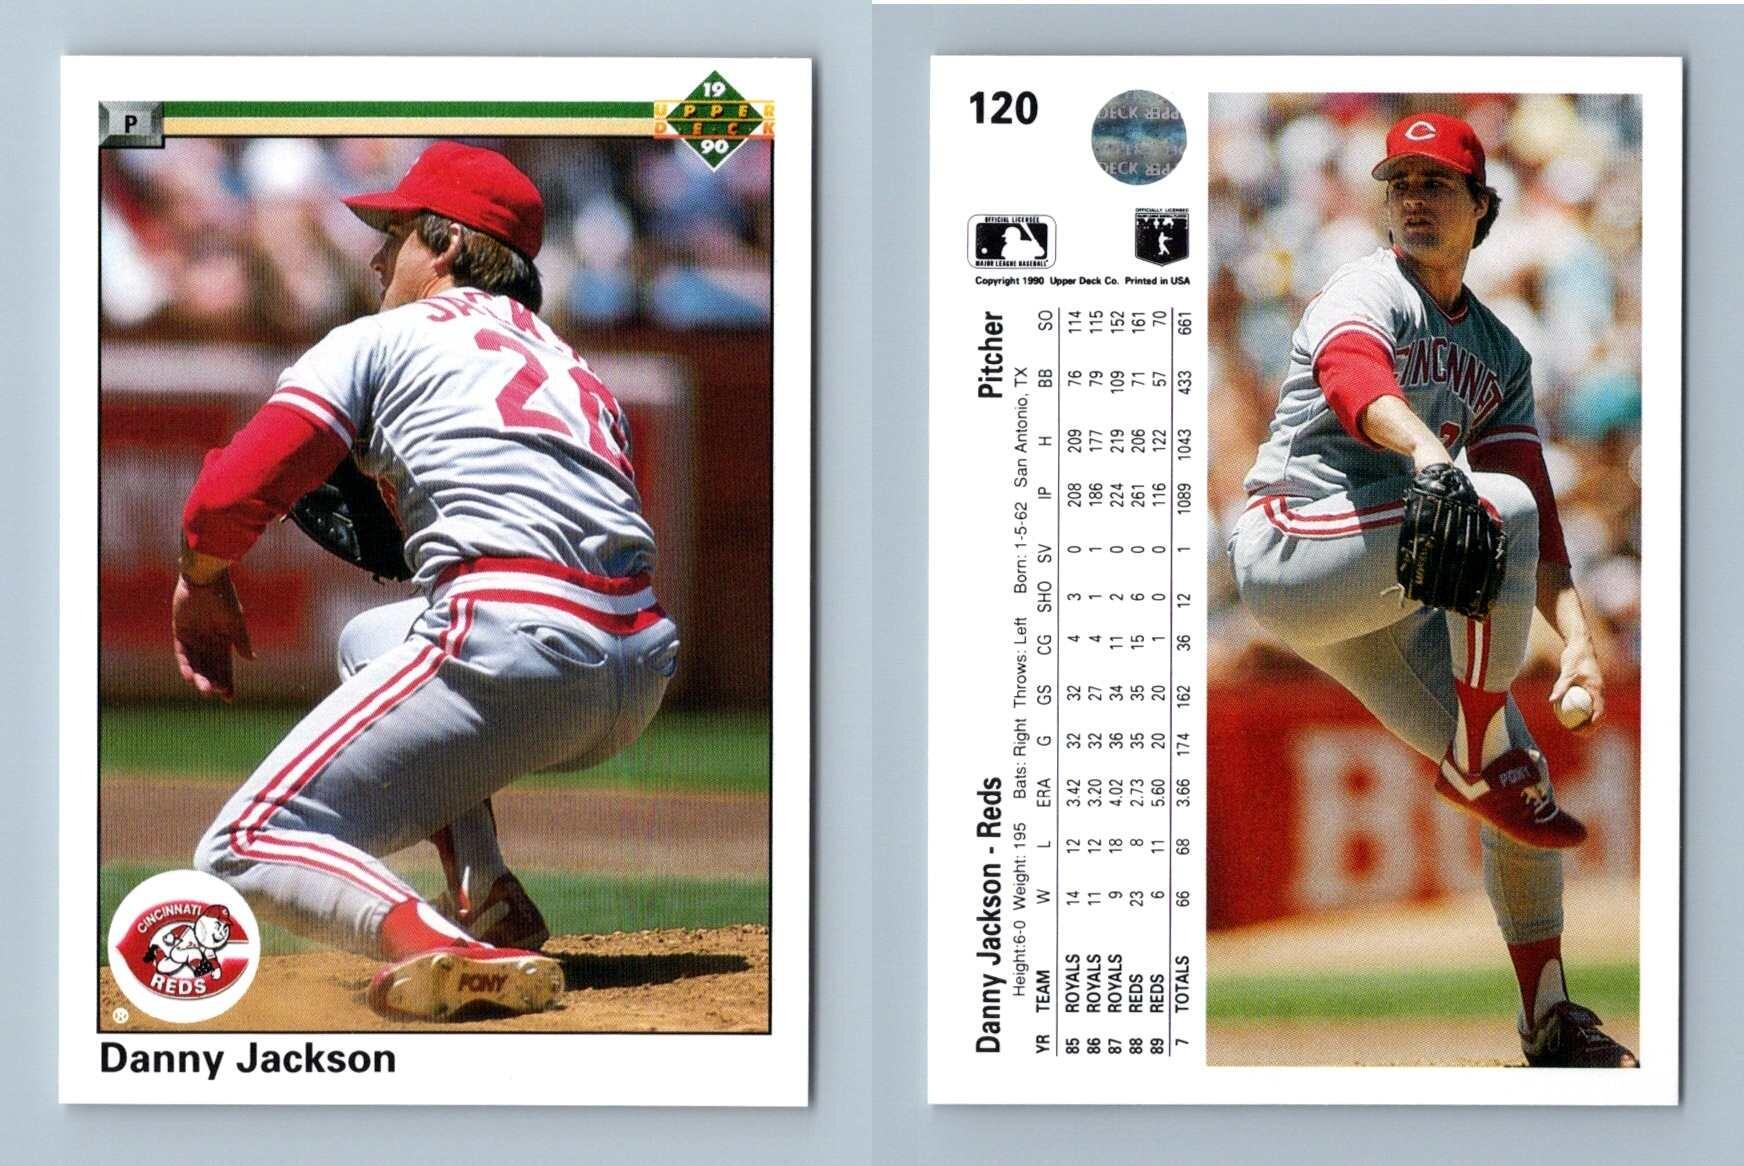 1990 Upper Deck Shawon Dunston card #231 Chicago Cubs Baseball